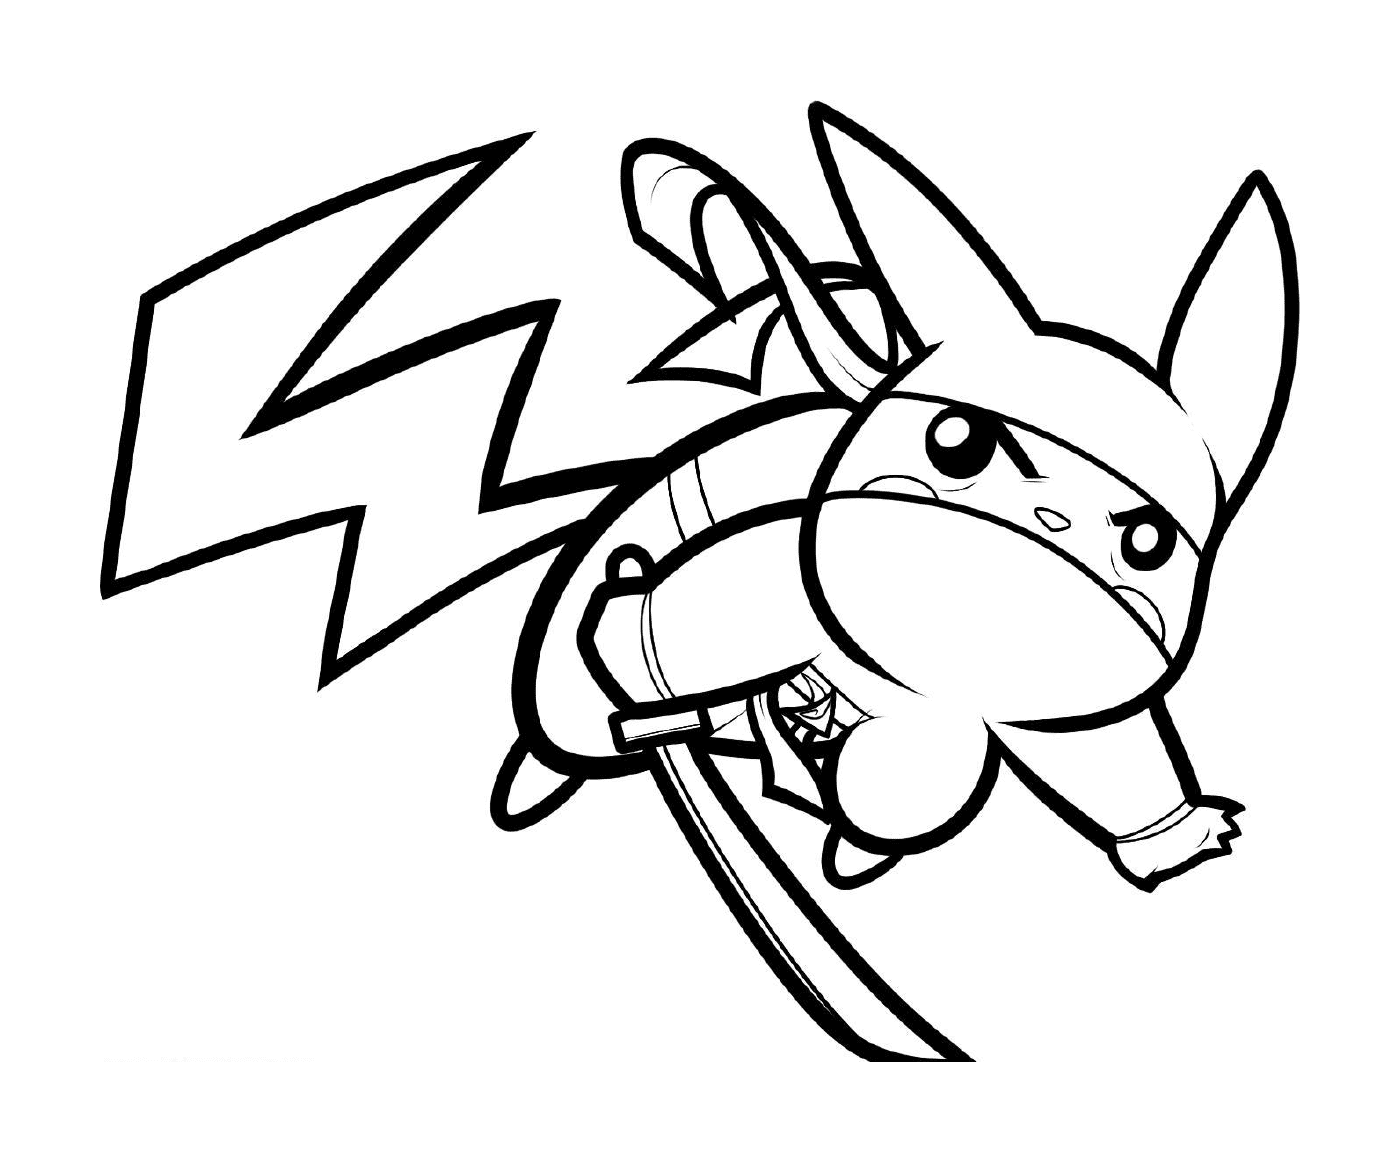   Pikachu, ninja malicieux équipé 